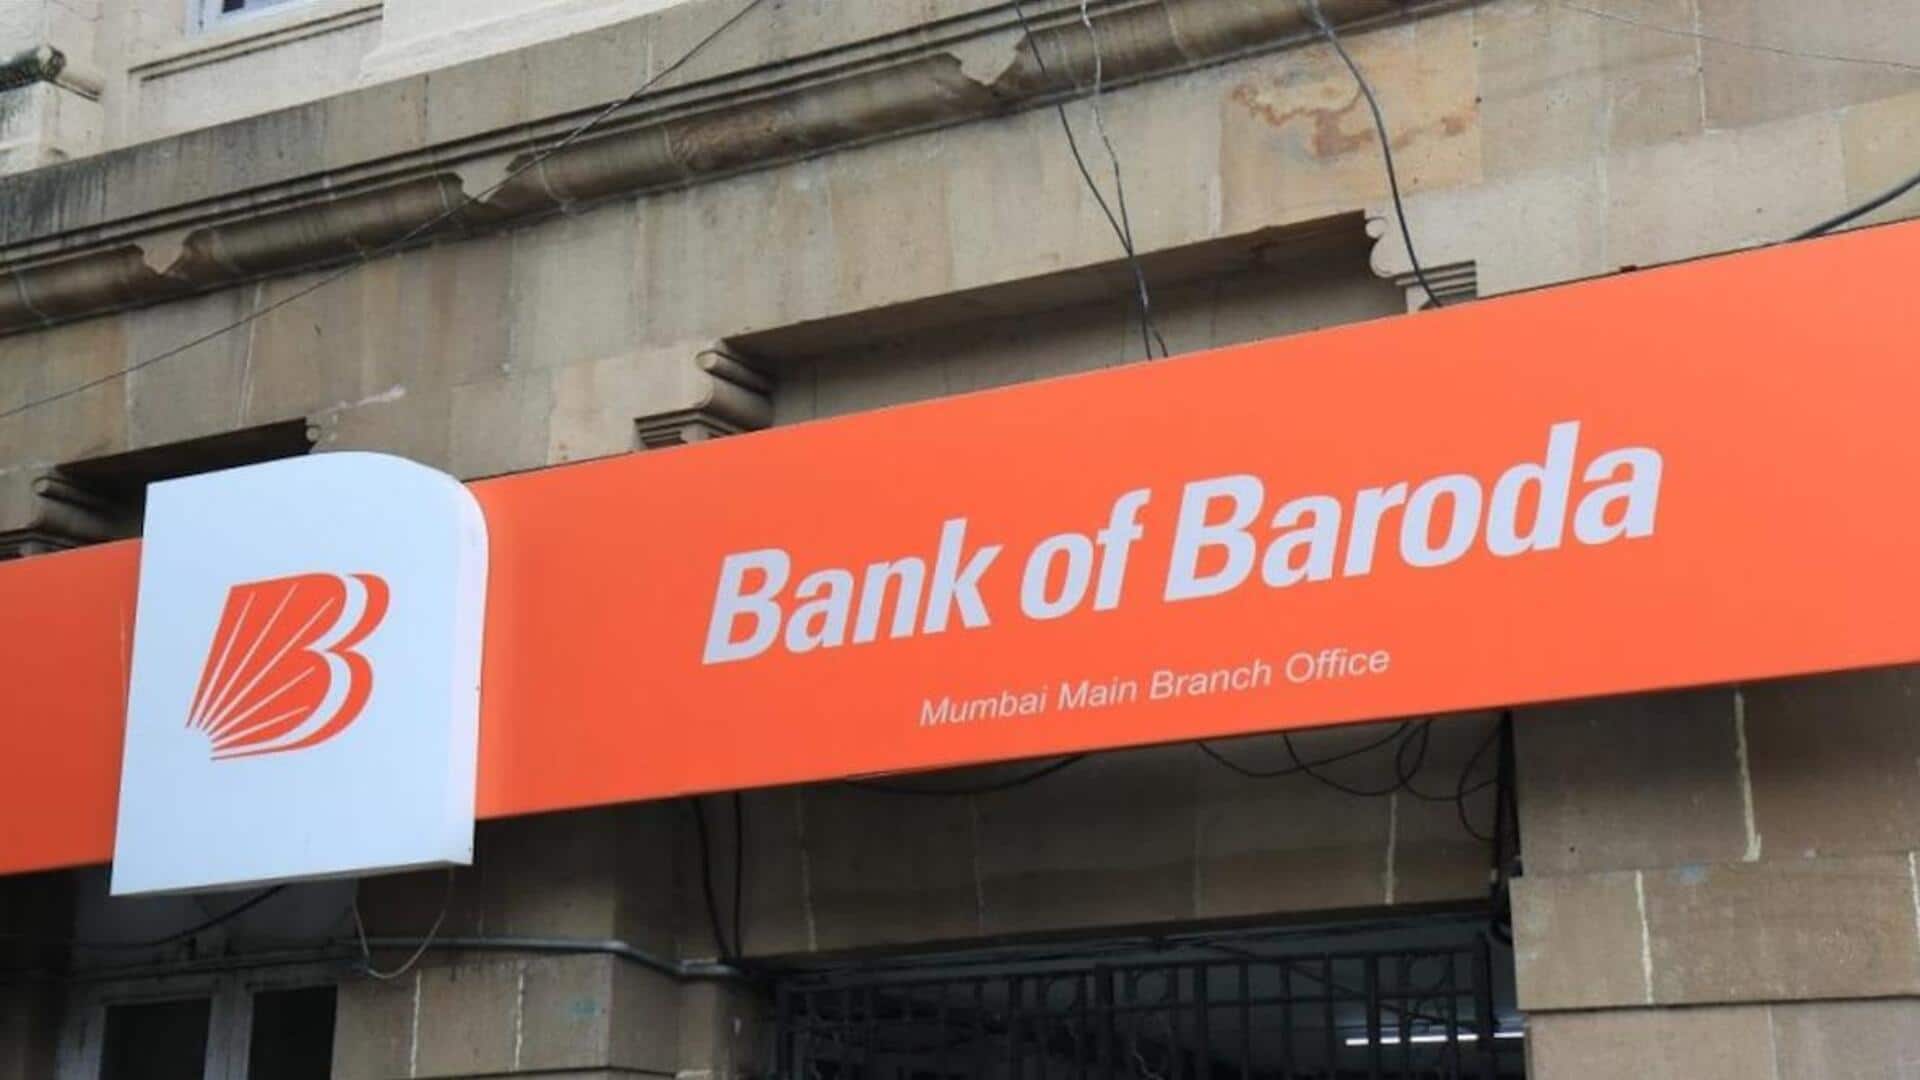 Bank of Baroda to issue bonds worth Rs. 5,000 crore